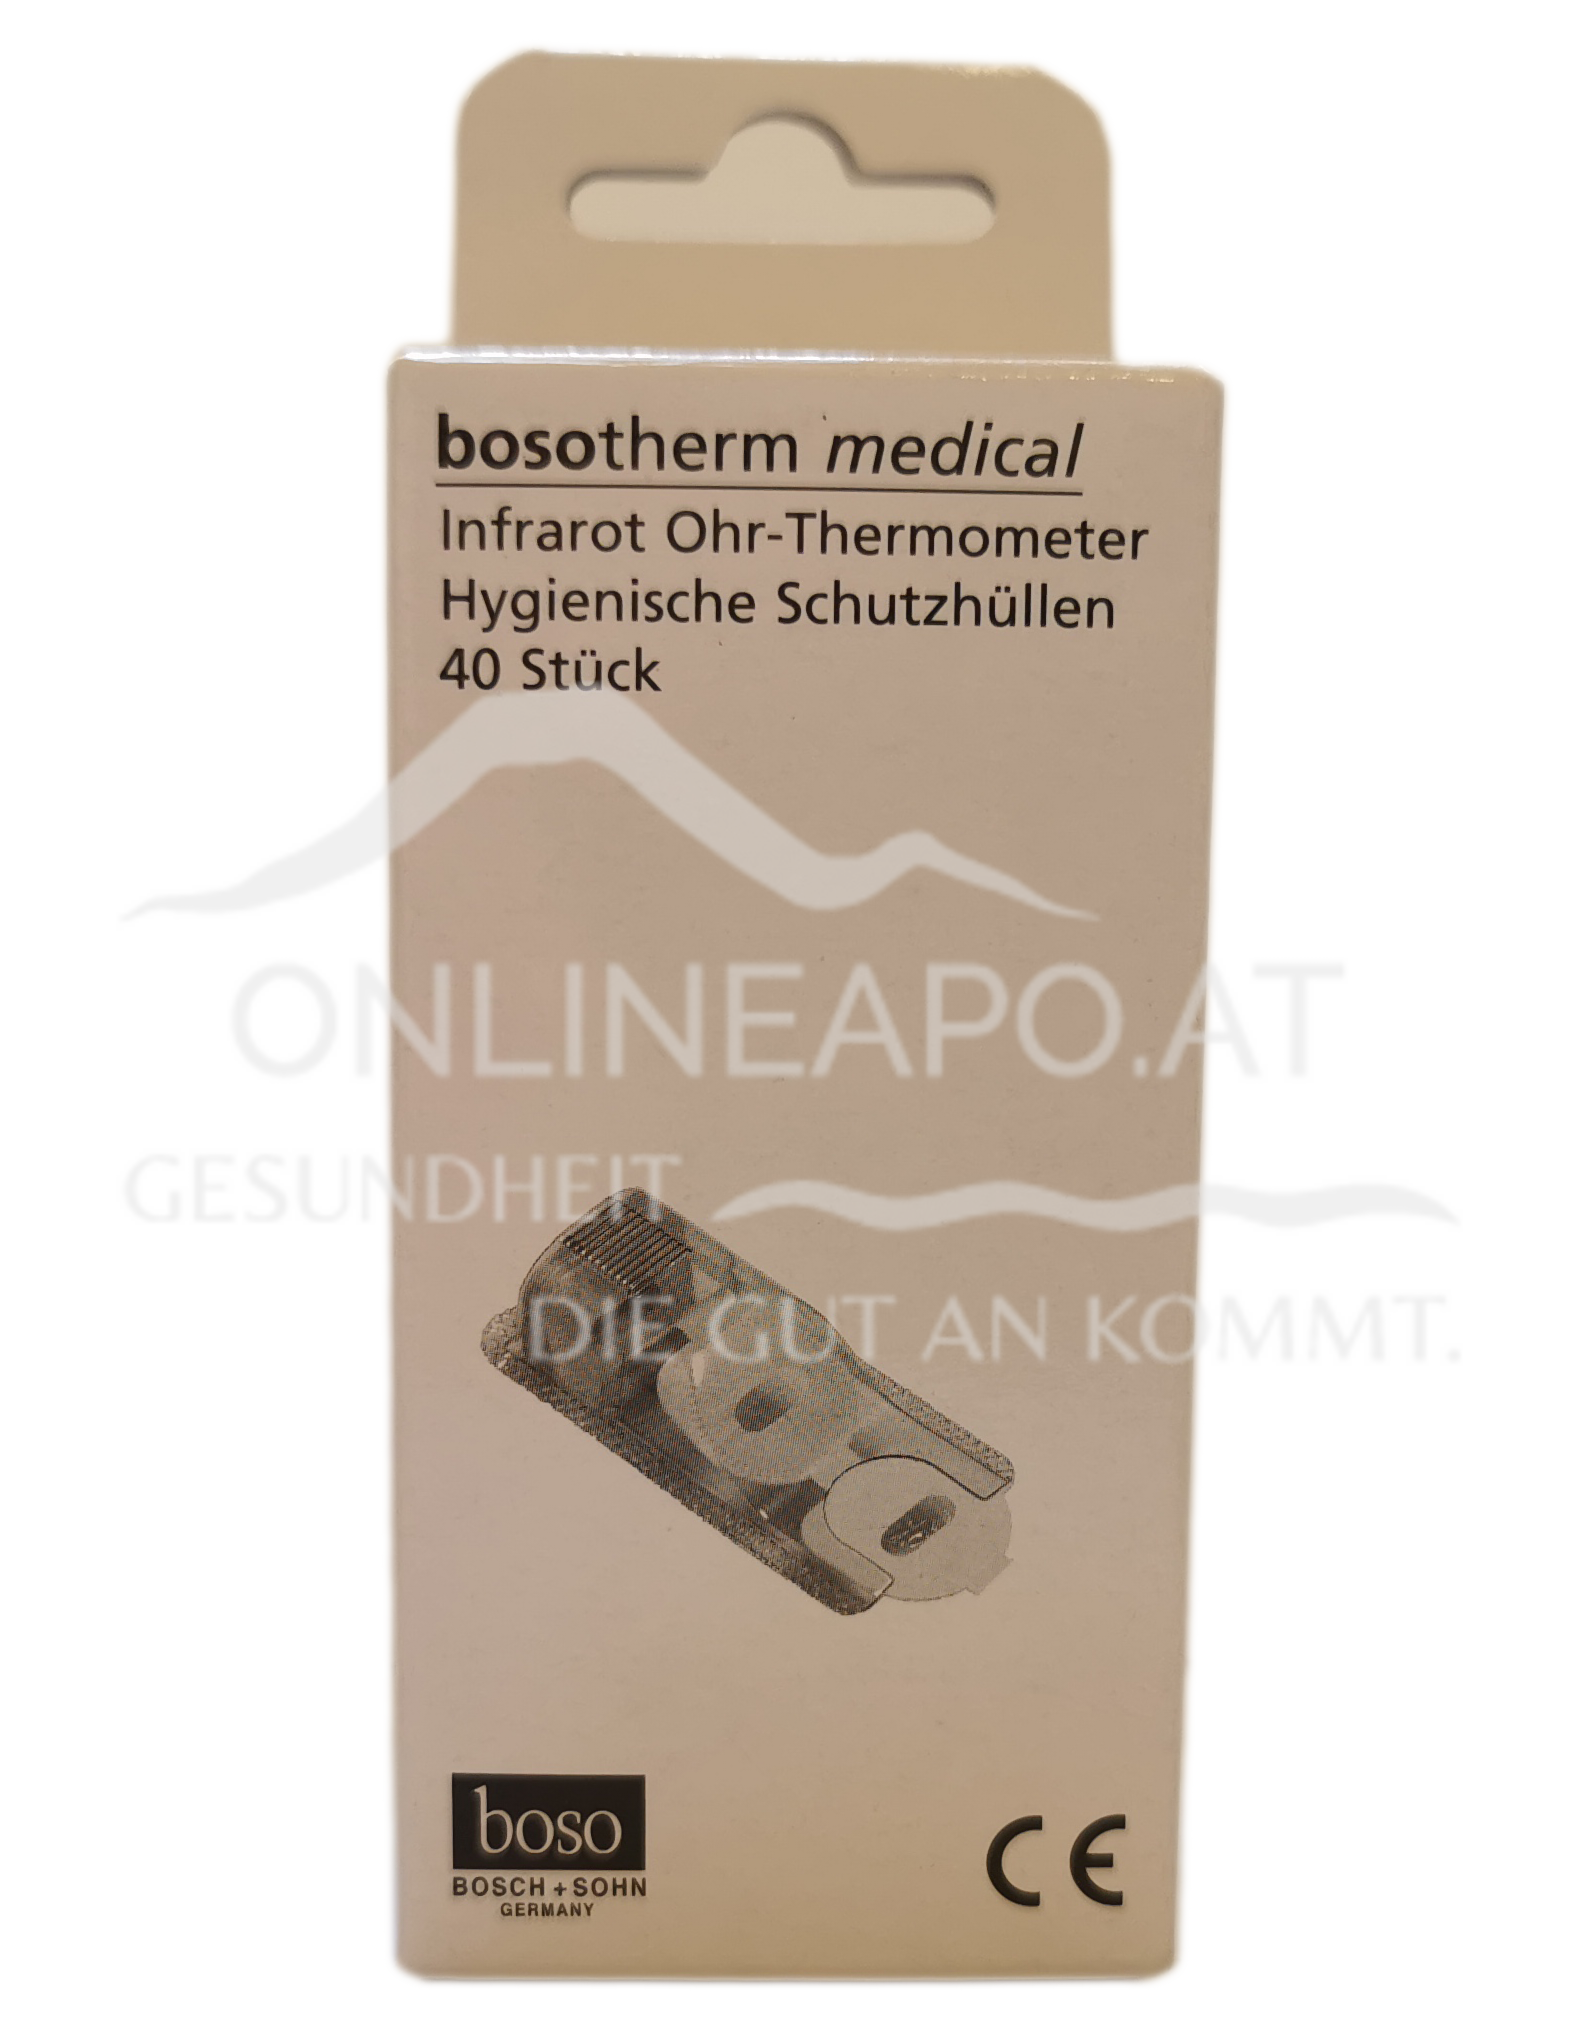 bosotherm medical Hygiene-Schutzhüllen